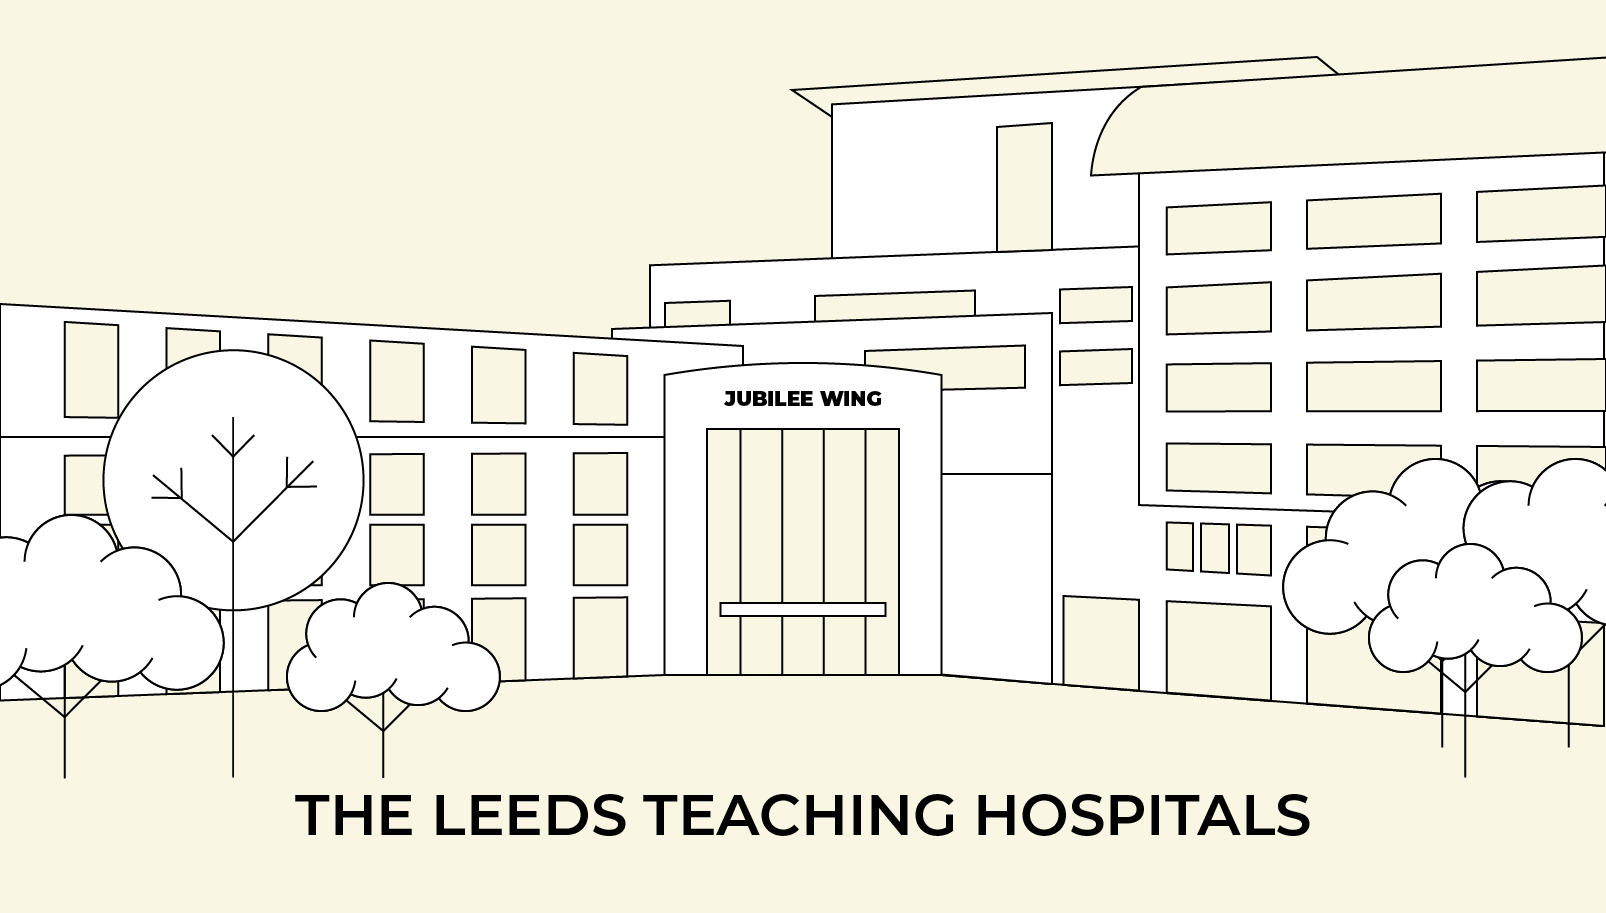 The Leeds Teaching Hospitals